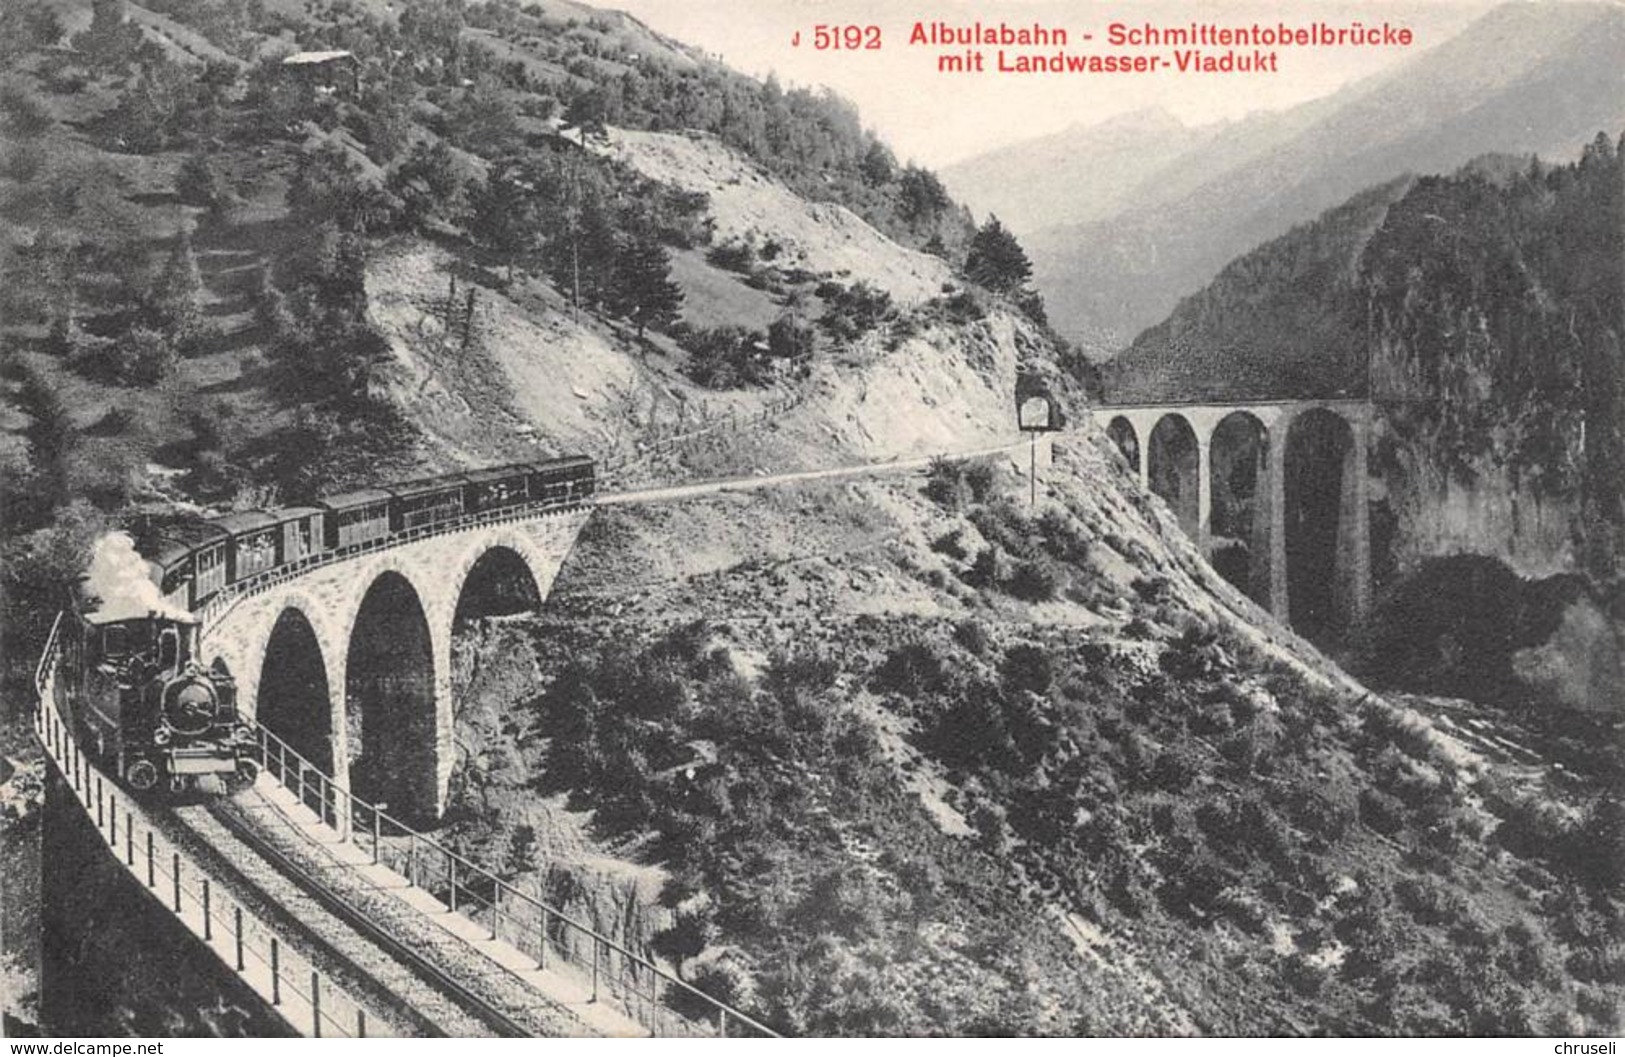 Albula Bahn Schmittentobelbrücke - Schmitten